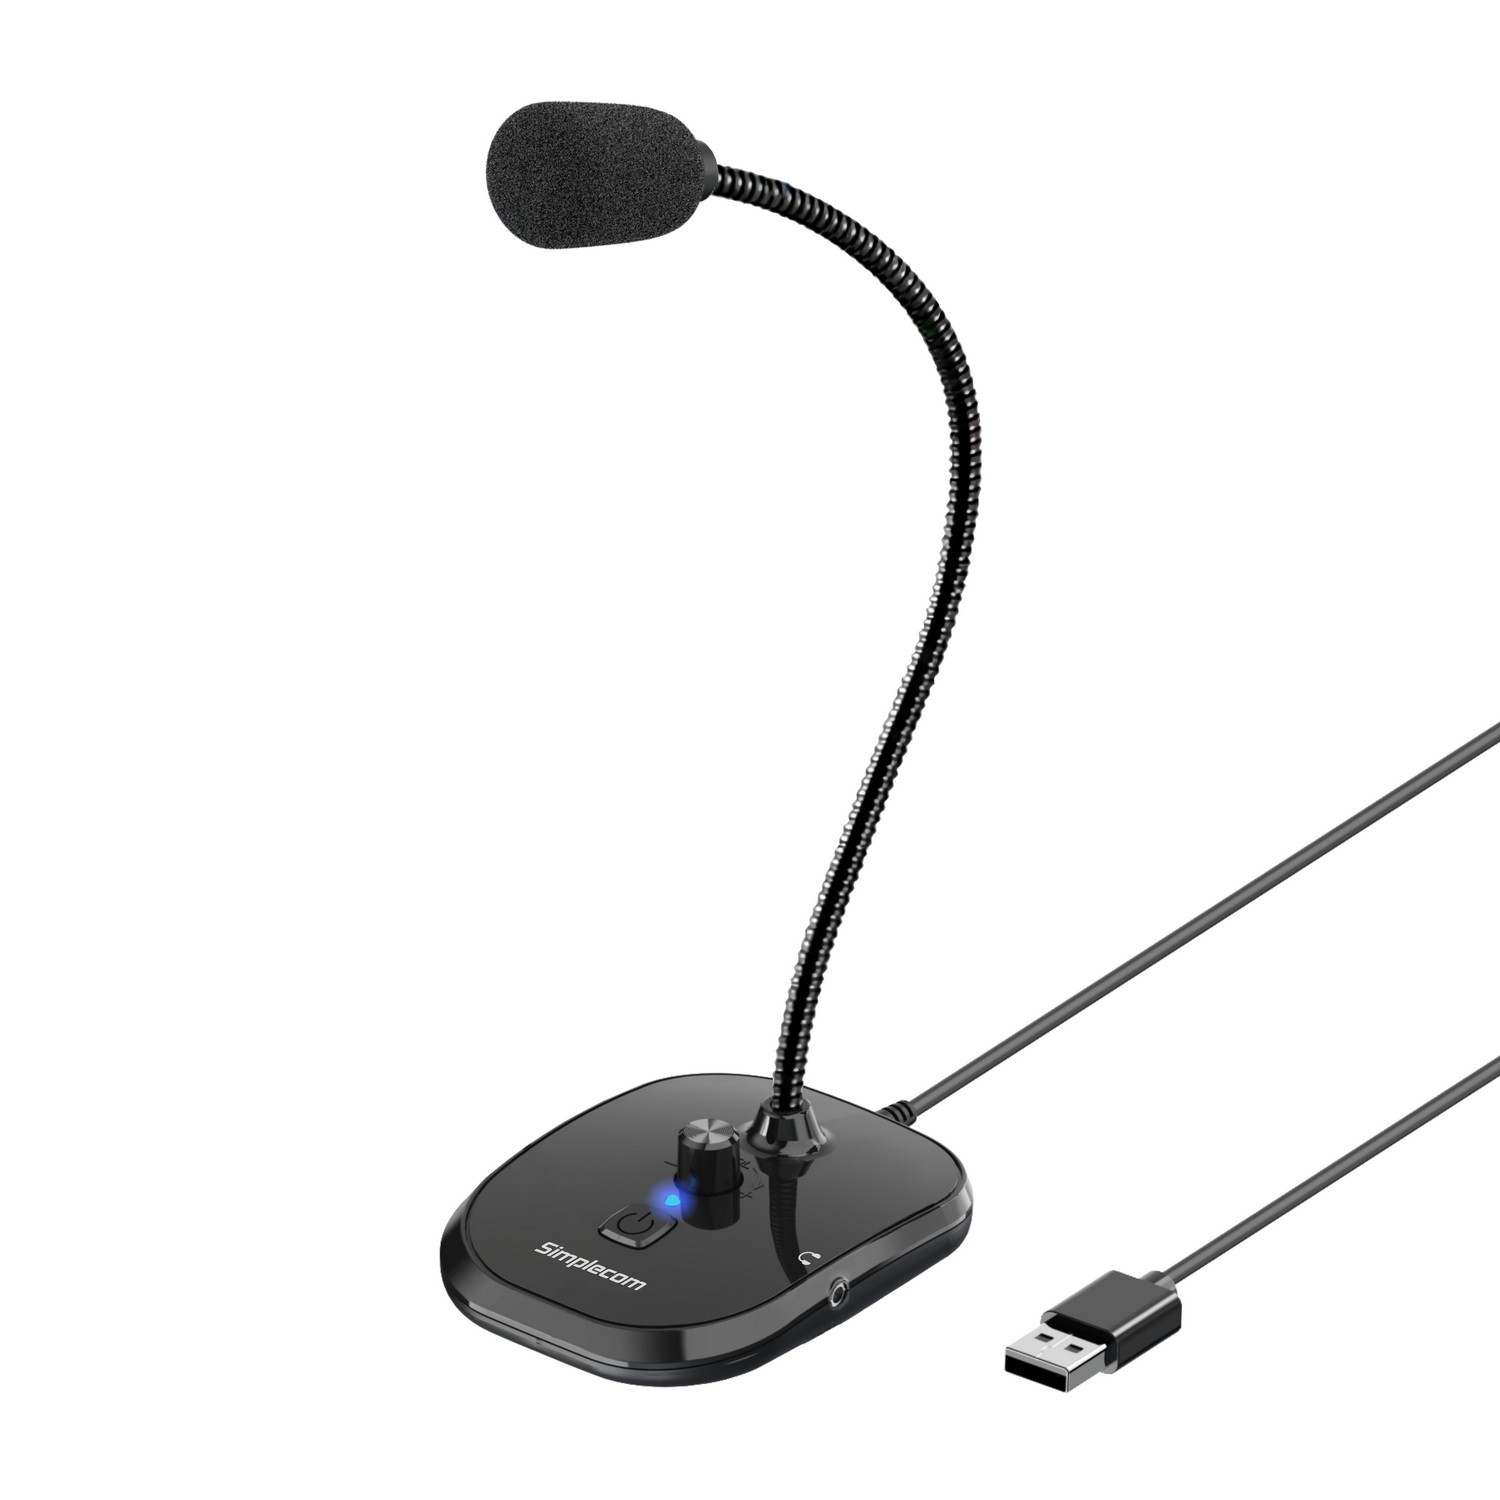  Plug and Play USB Desktop Microphone with Headphone Jack  